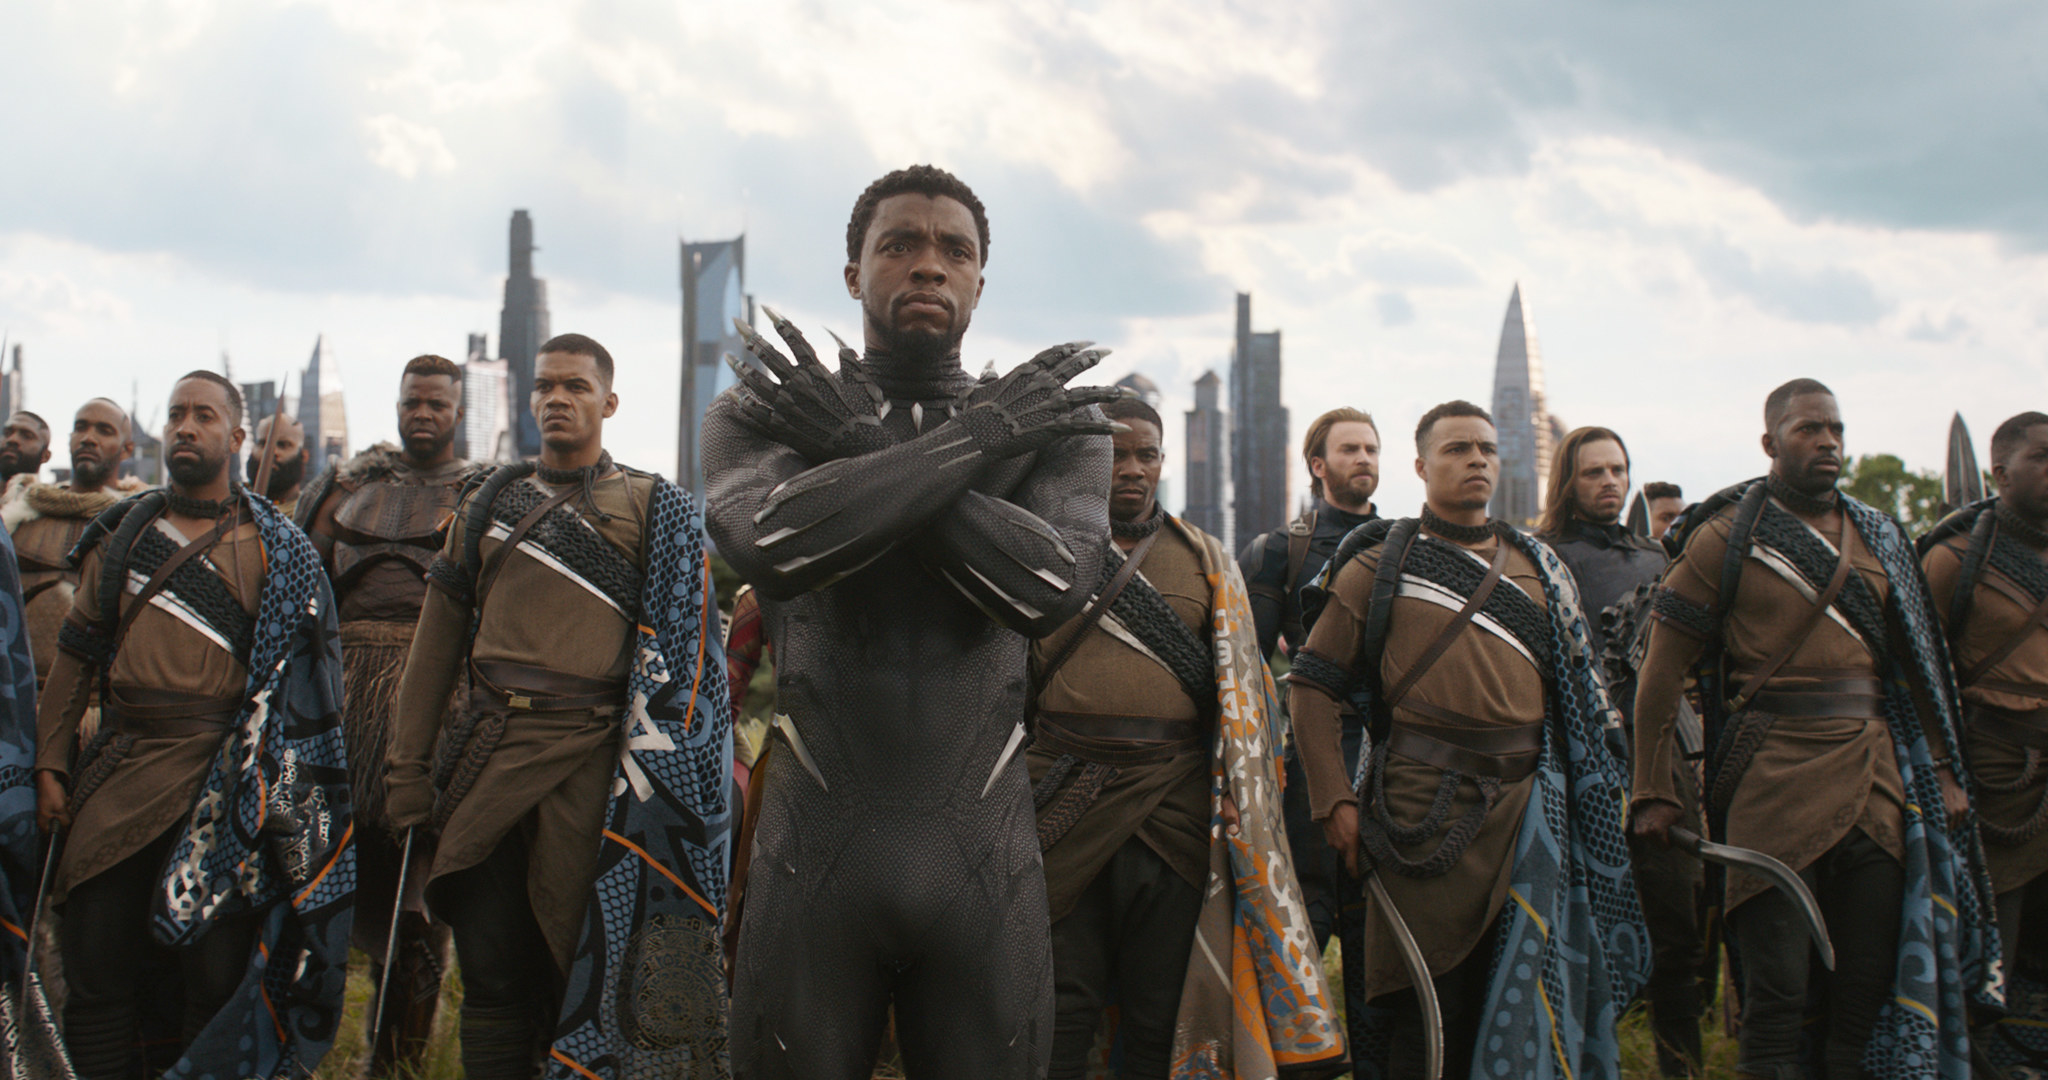 Boseman做& # x27; Wakanda永远# x27;敬礼战士站在他身后的黑豹在复仇者:无穷战争